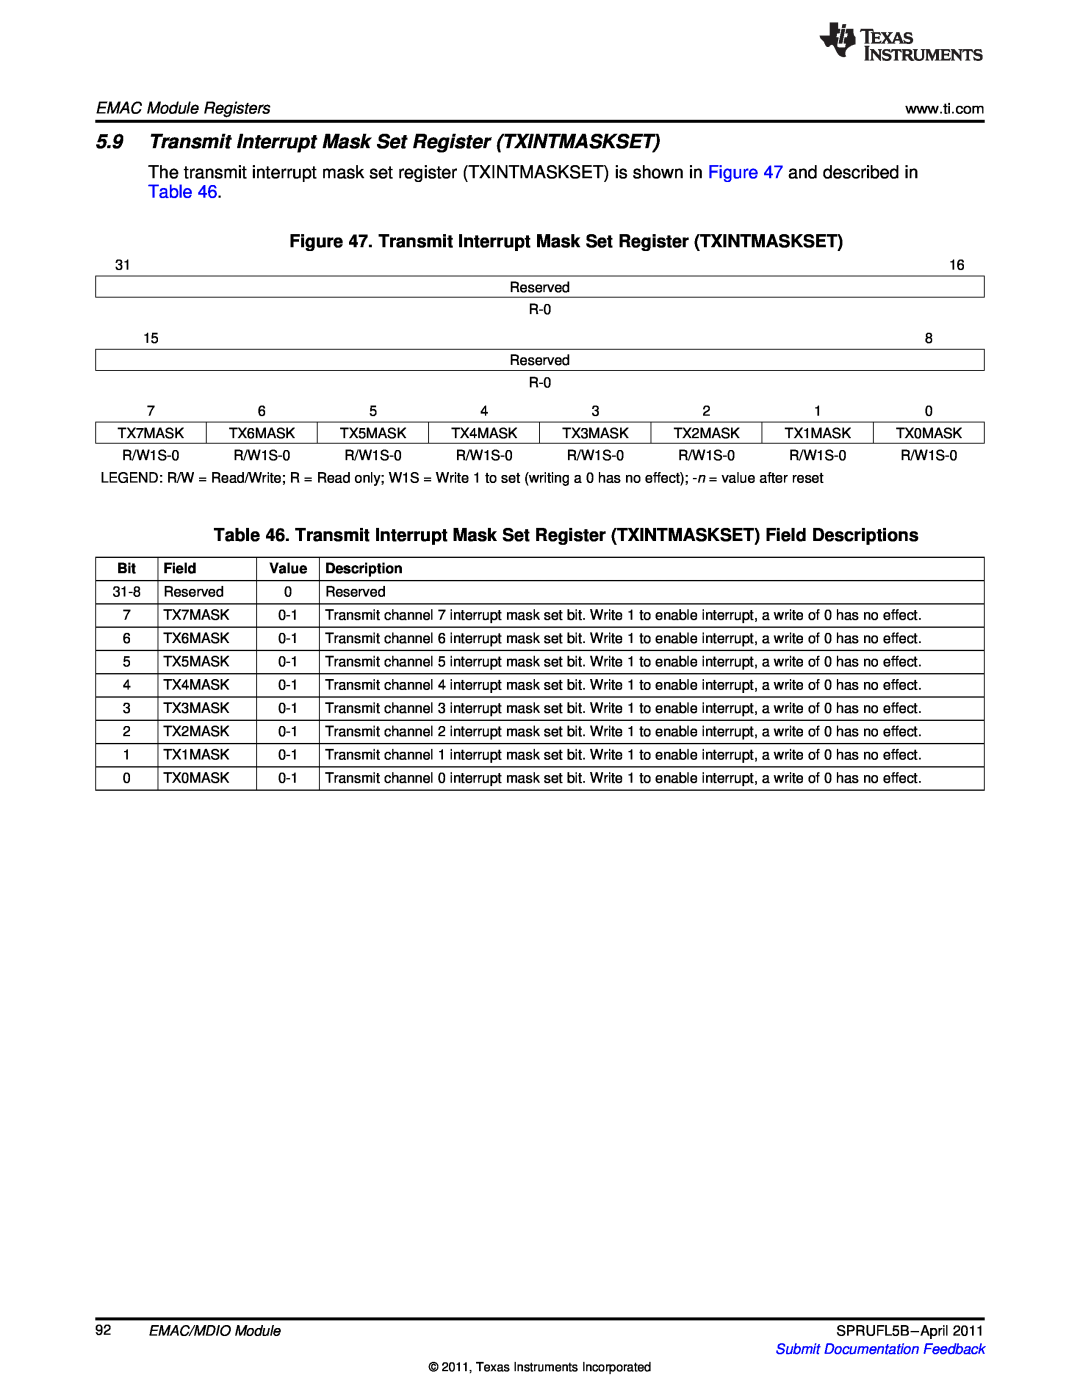 Texas Instruments TMS320C674X manual Transmit Interrupt Mask Set Register TXINTMASKSET, EMAC Module Registers, Field, Value 